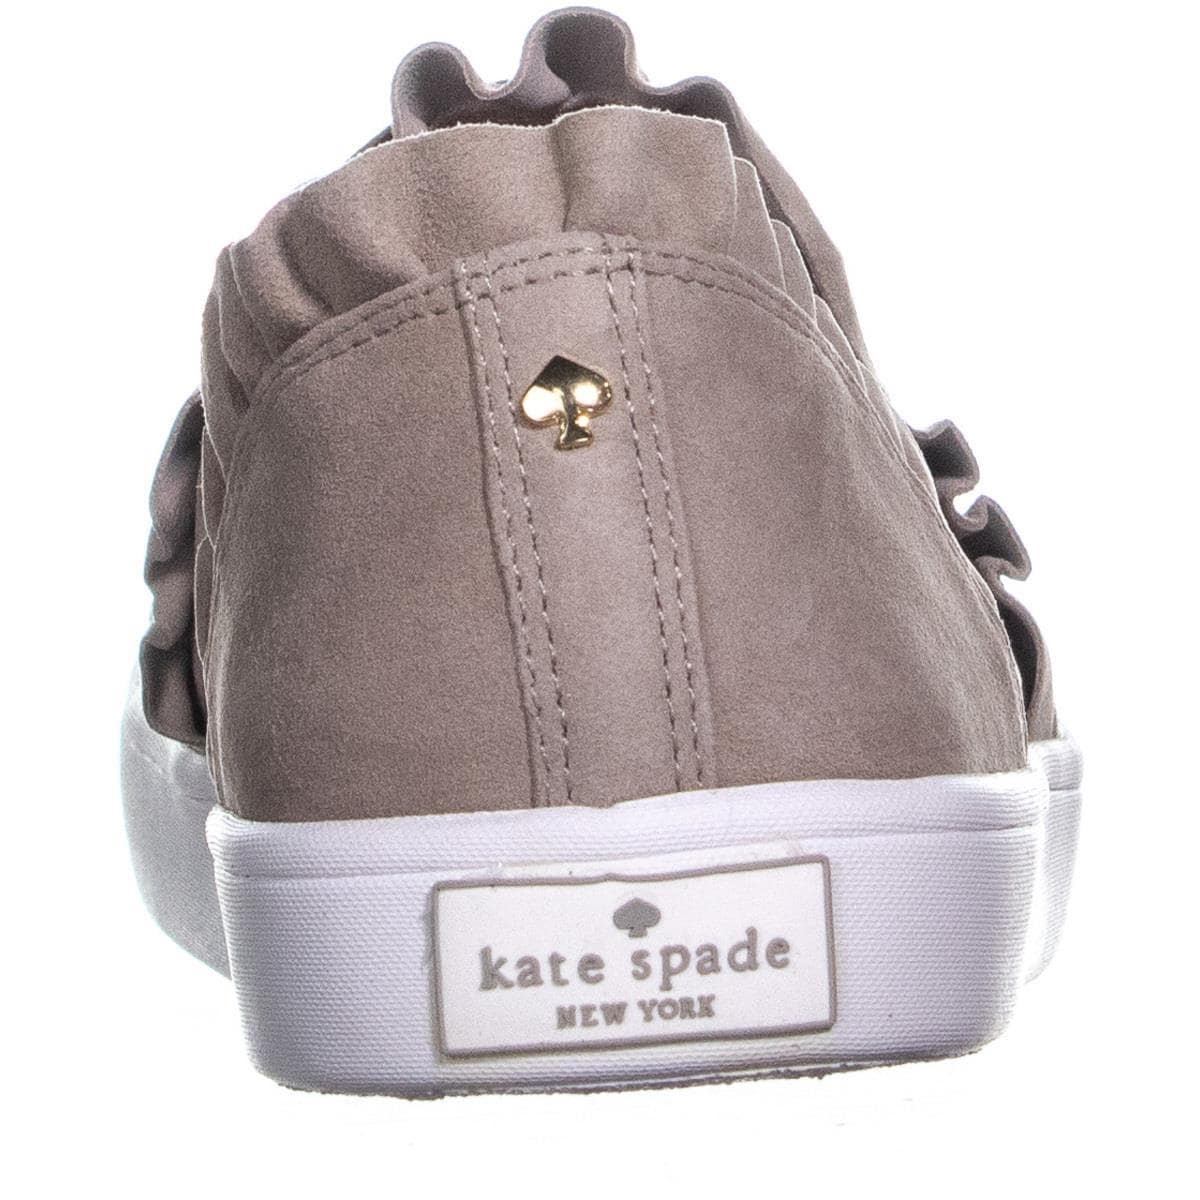 kate spade new york women's lilly sneaker